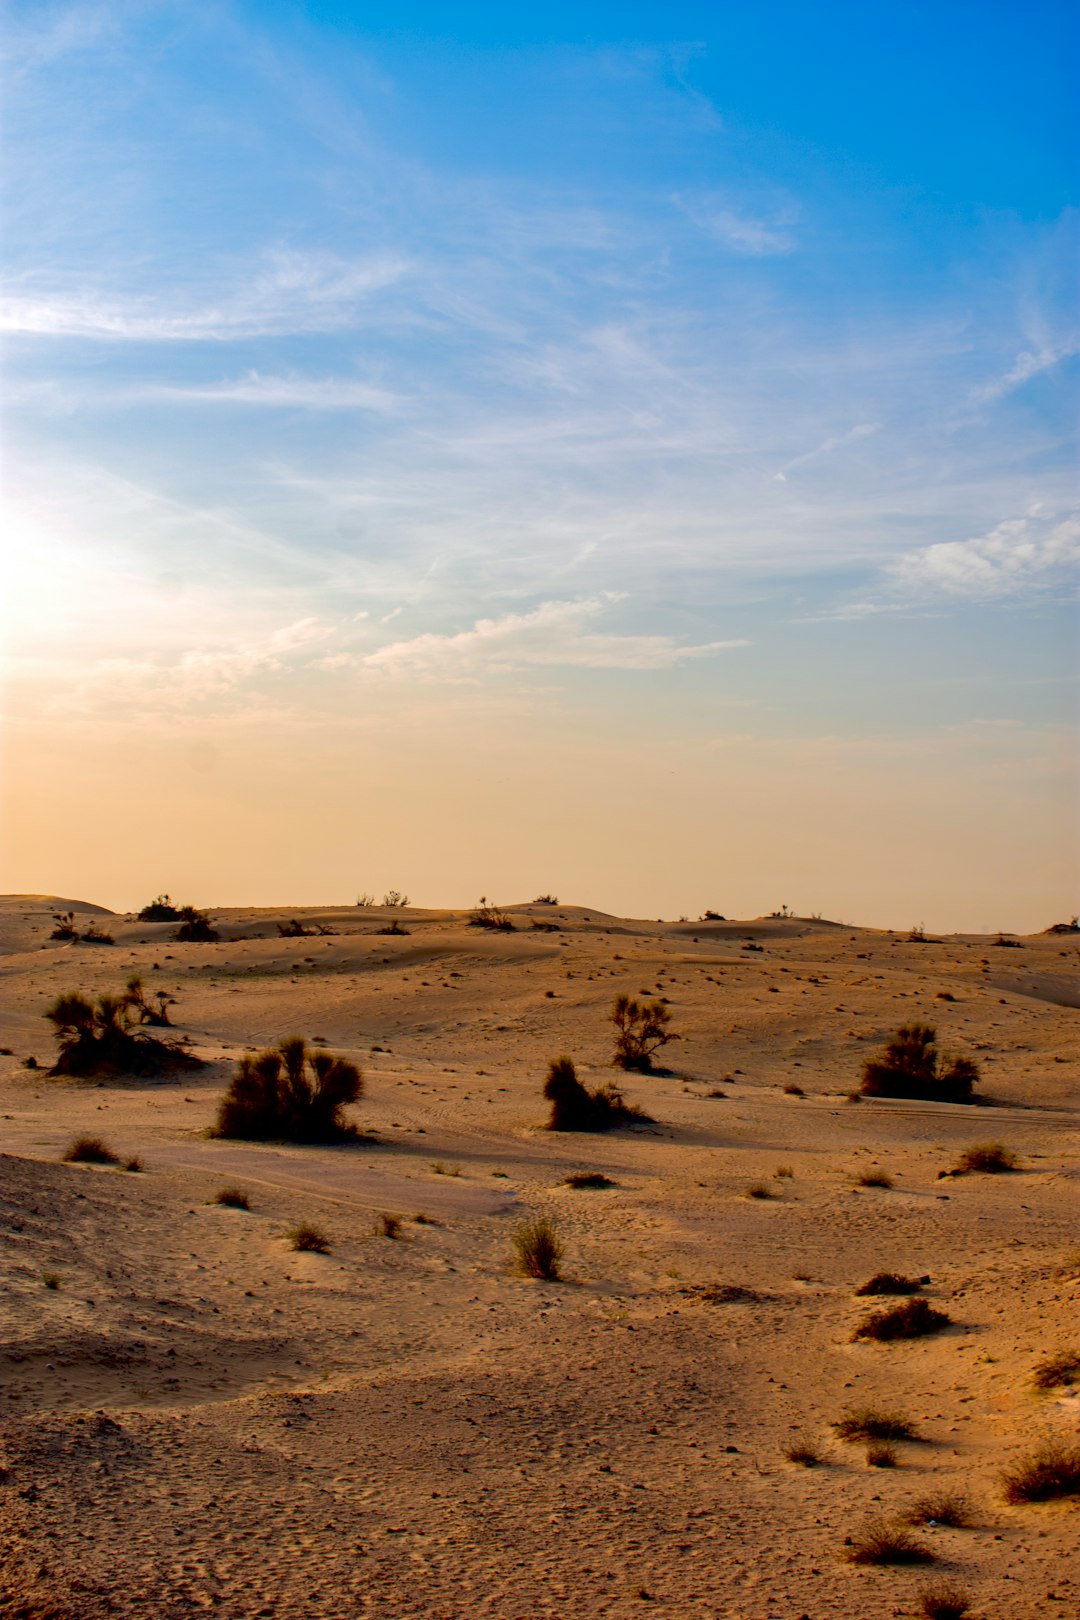 Desert photo spot Desert Safari Dubai - Dubai - United Arab Emirates Sharjah - United Arab Emirates